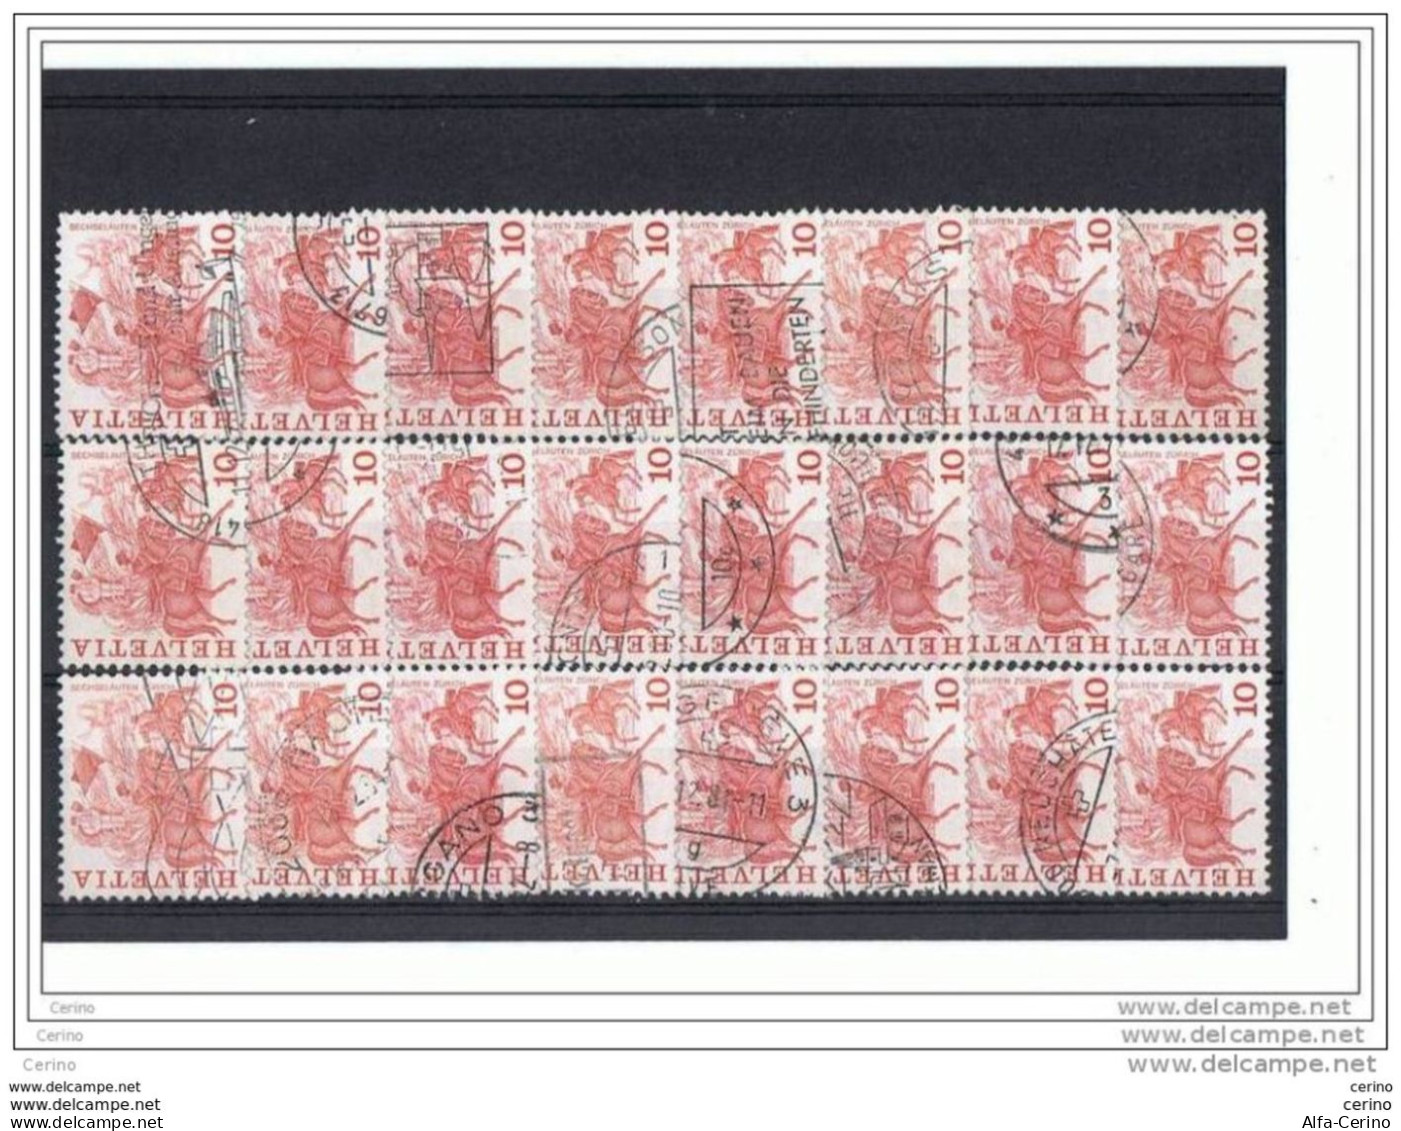 SVIZZERA:  1977  DEFINITIVA  - 10 C. ROSSO  US. -  RIPETUTO  24  VOLTE  -  YV/TELL. 1034 - Used Stamps